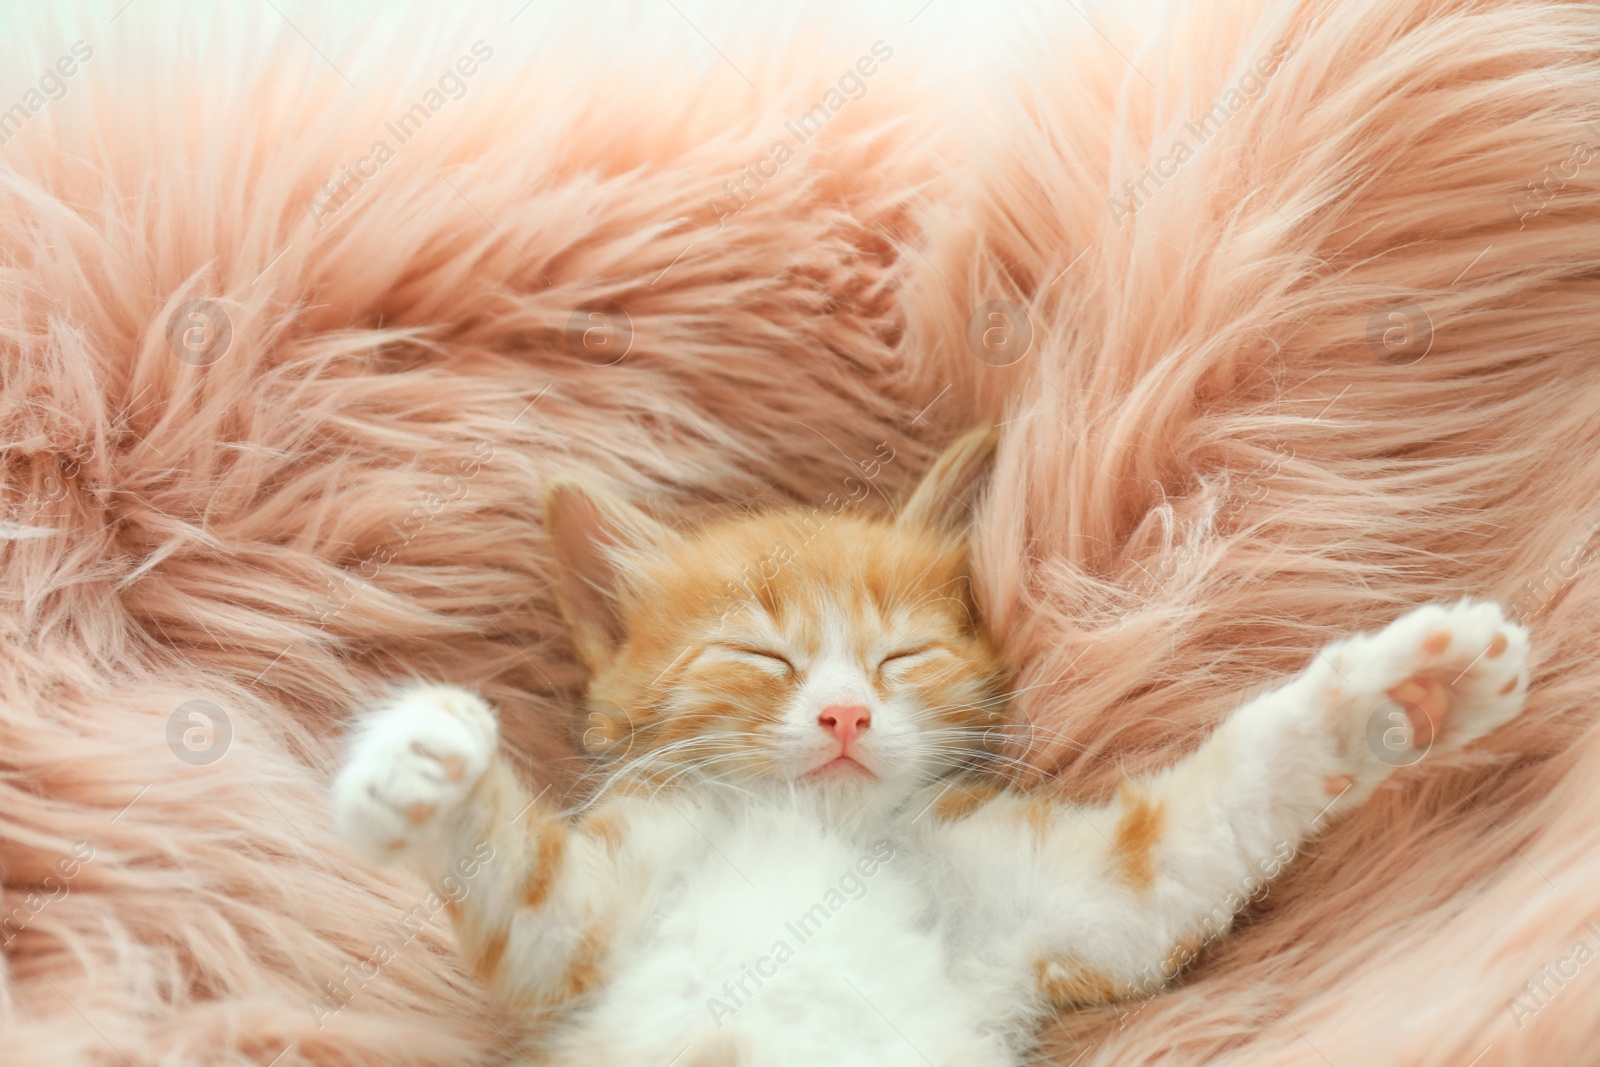 Photo of Cute little kitten sleeping on pink furry blanket, above view